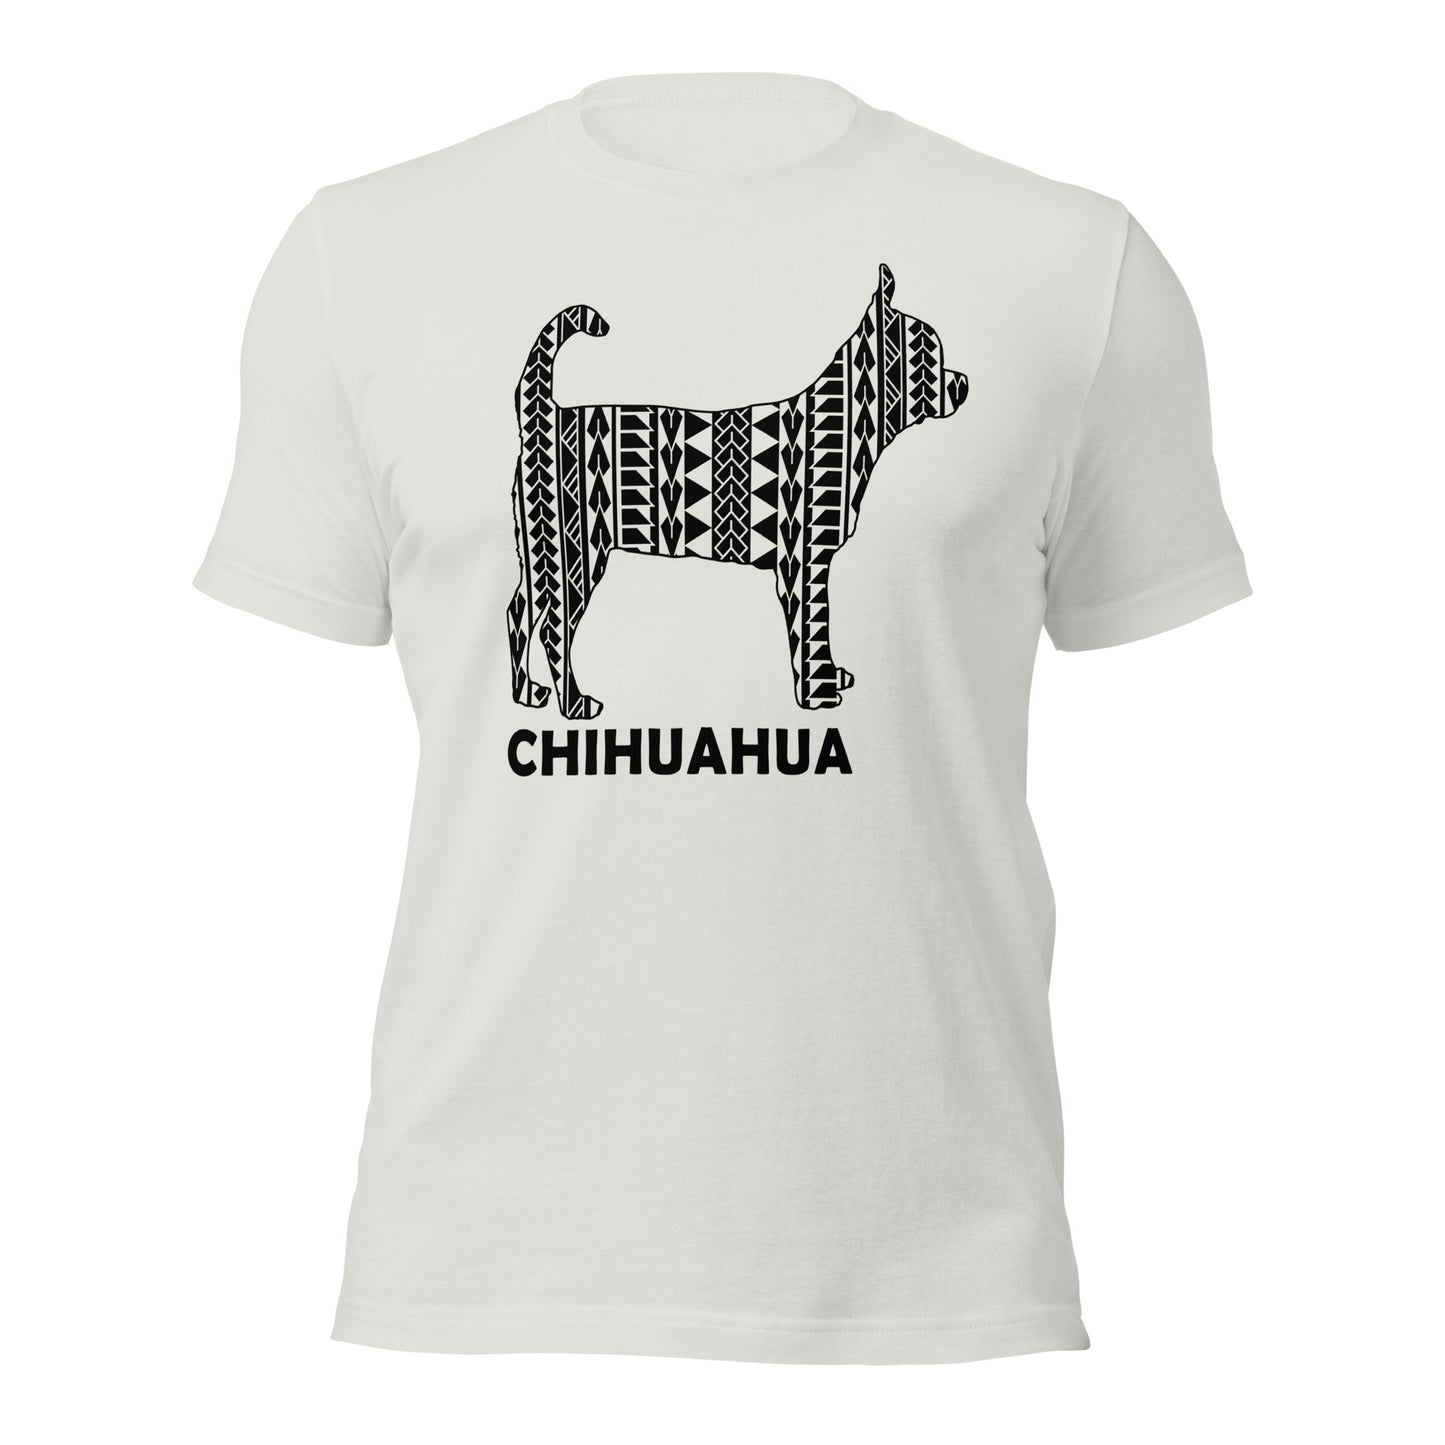 Chihuahua Polynesian t-shirt silver by Dog Artistry.